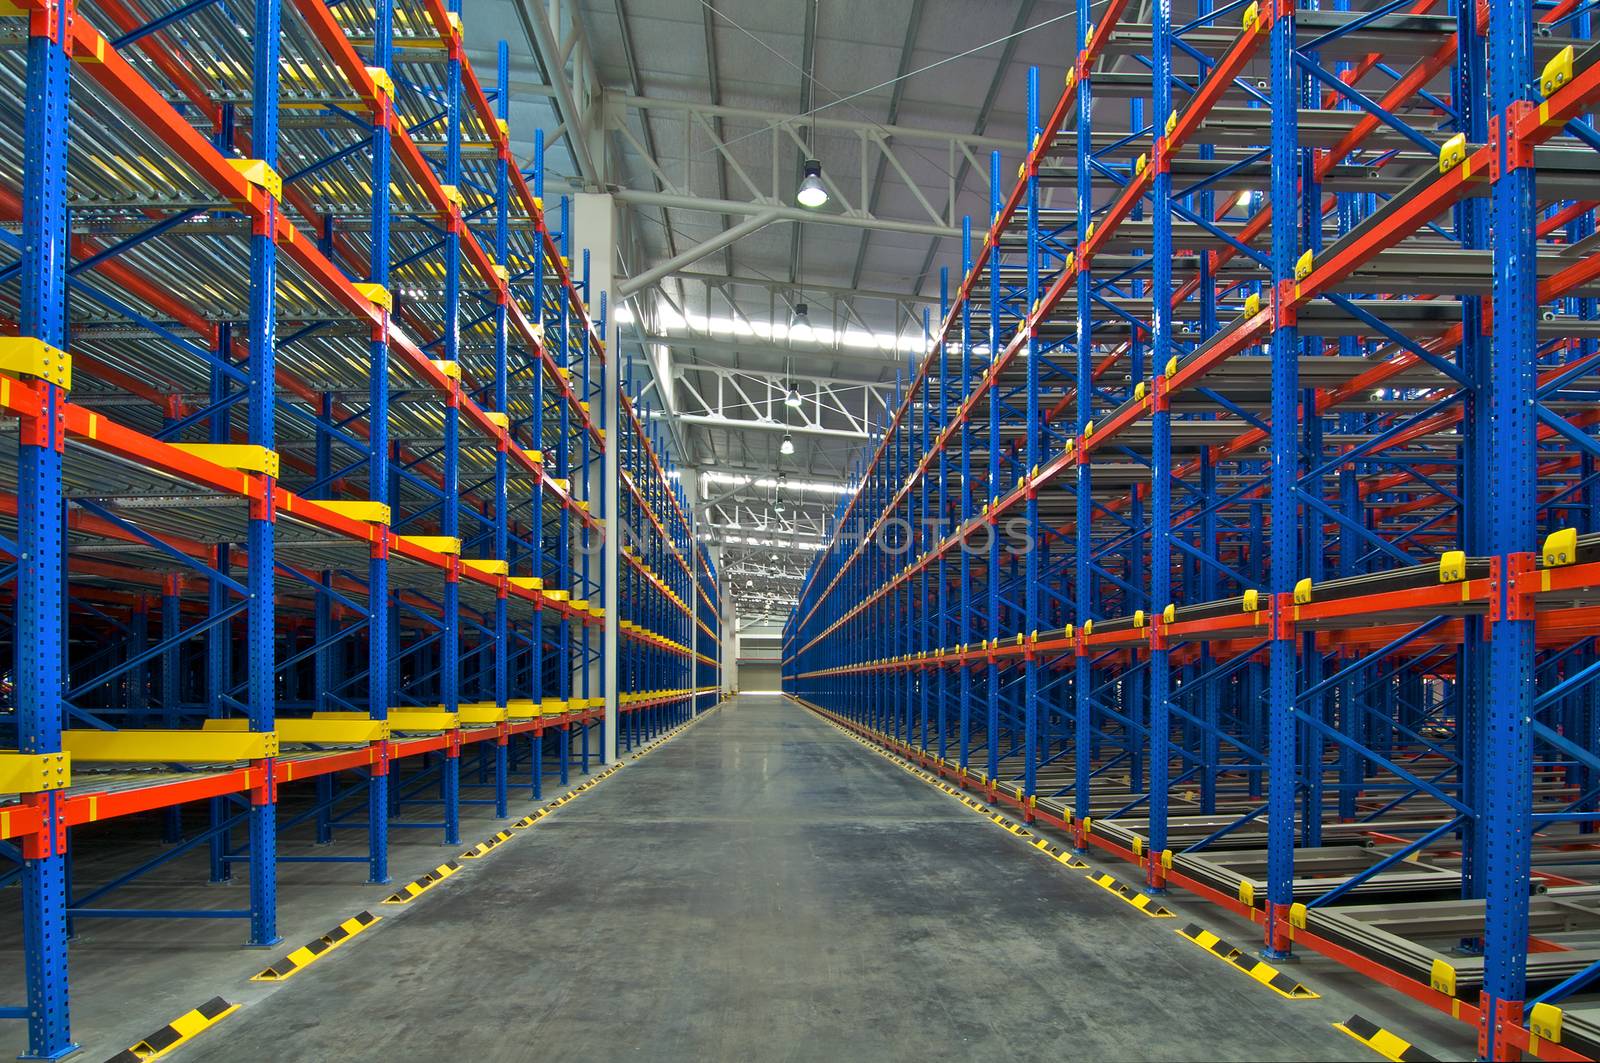 Warehouse  shelving  storage, metal, pallet racking system in warehouse